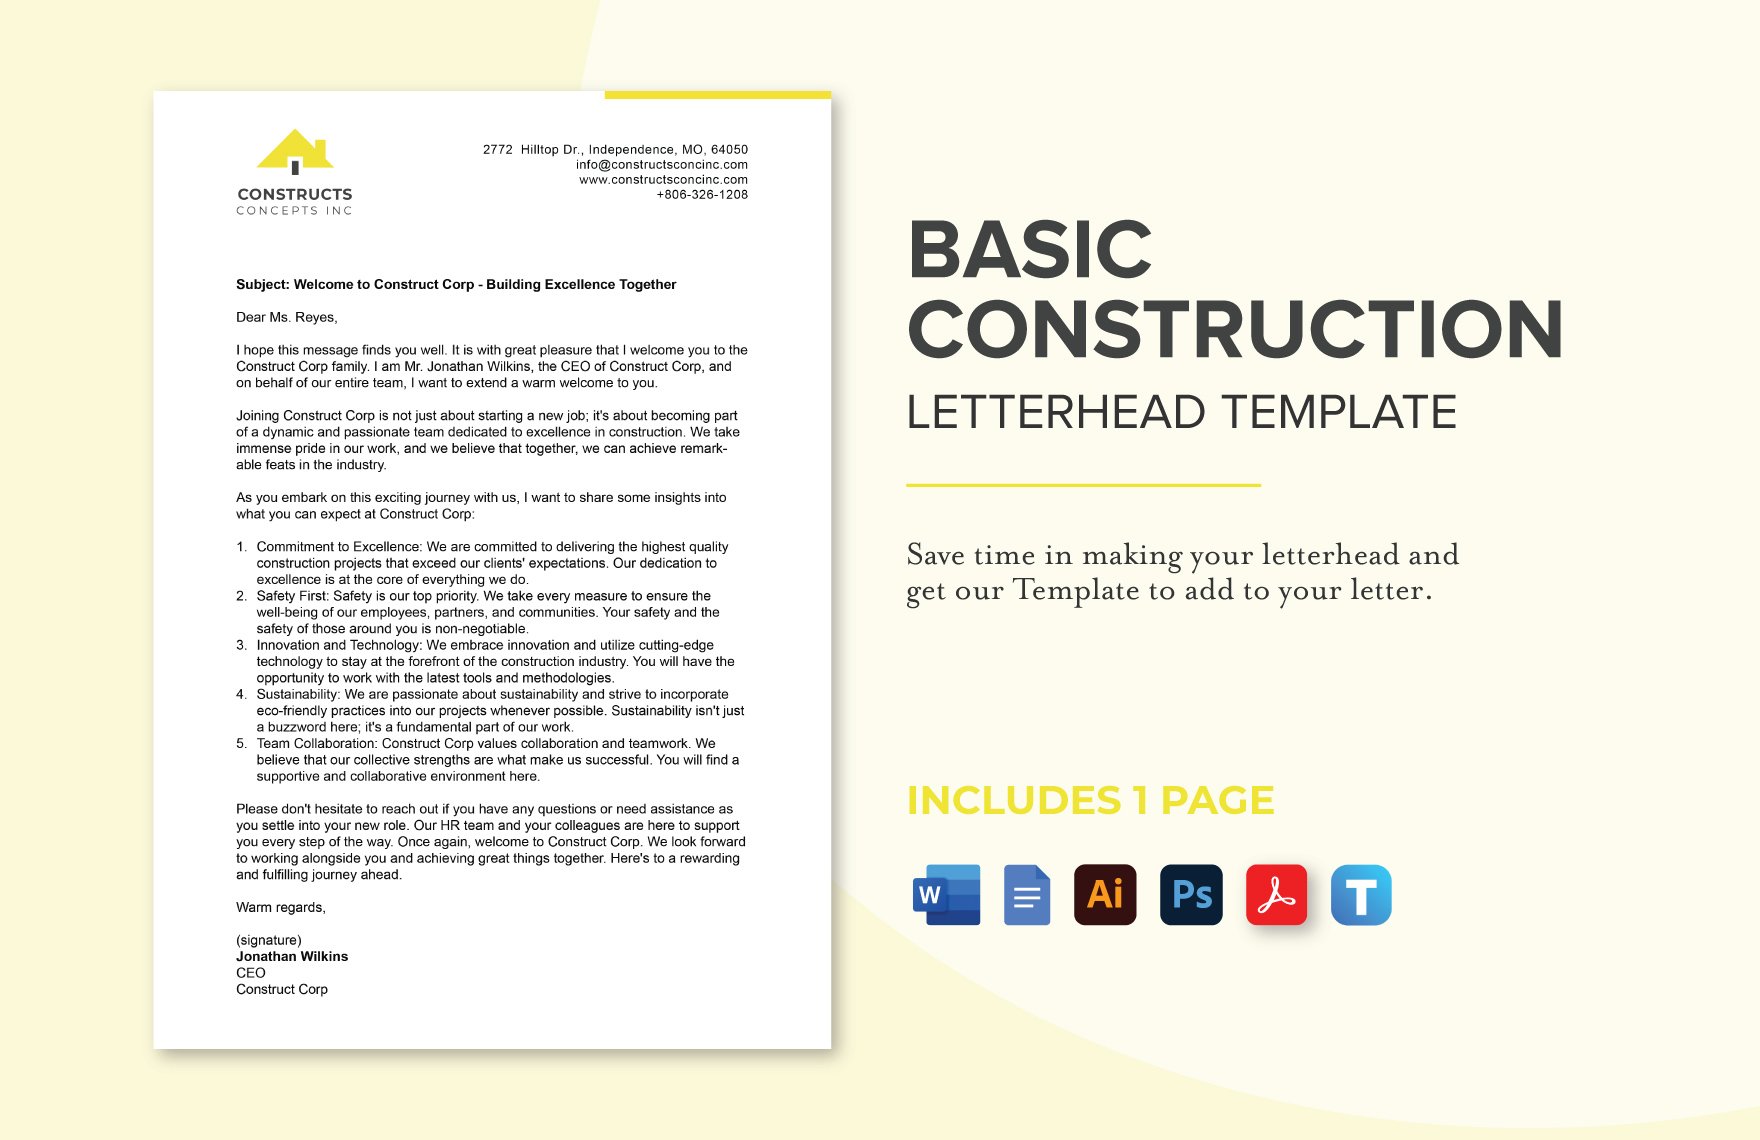 Basic Construction Letterhead Template